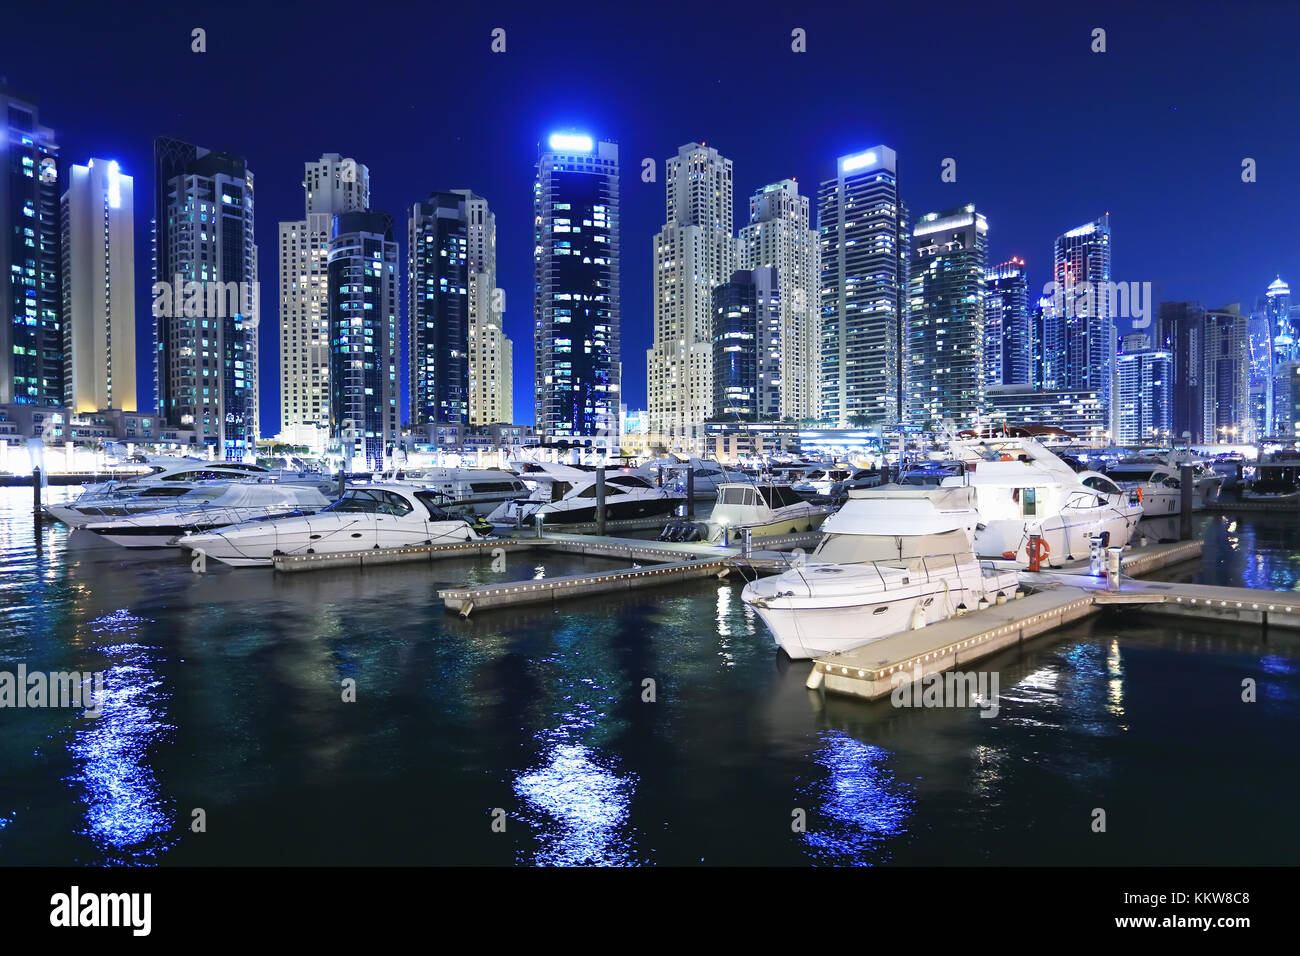 Marina con yates de lujo en Dubai por la noche. La noche rascacielos de Dubai. distrito de negocios de Dubai, en la noche. Foto de stock